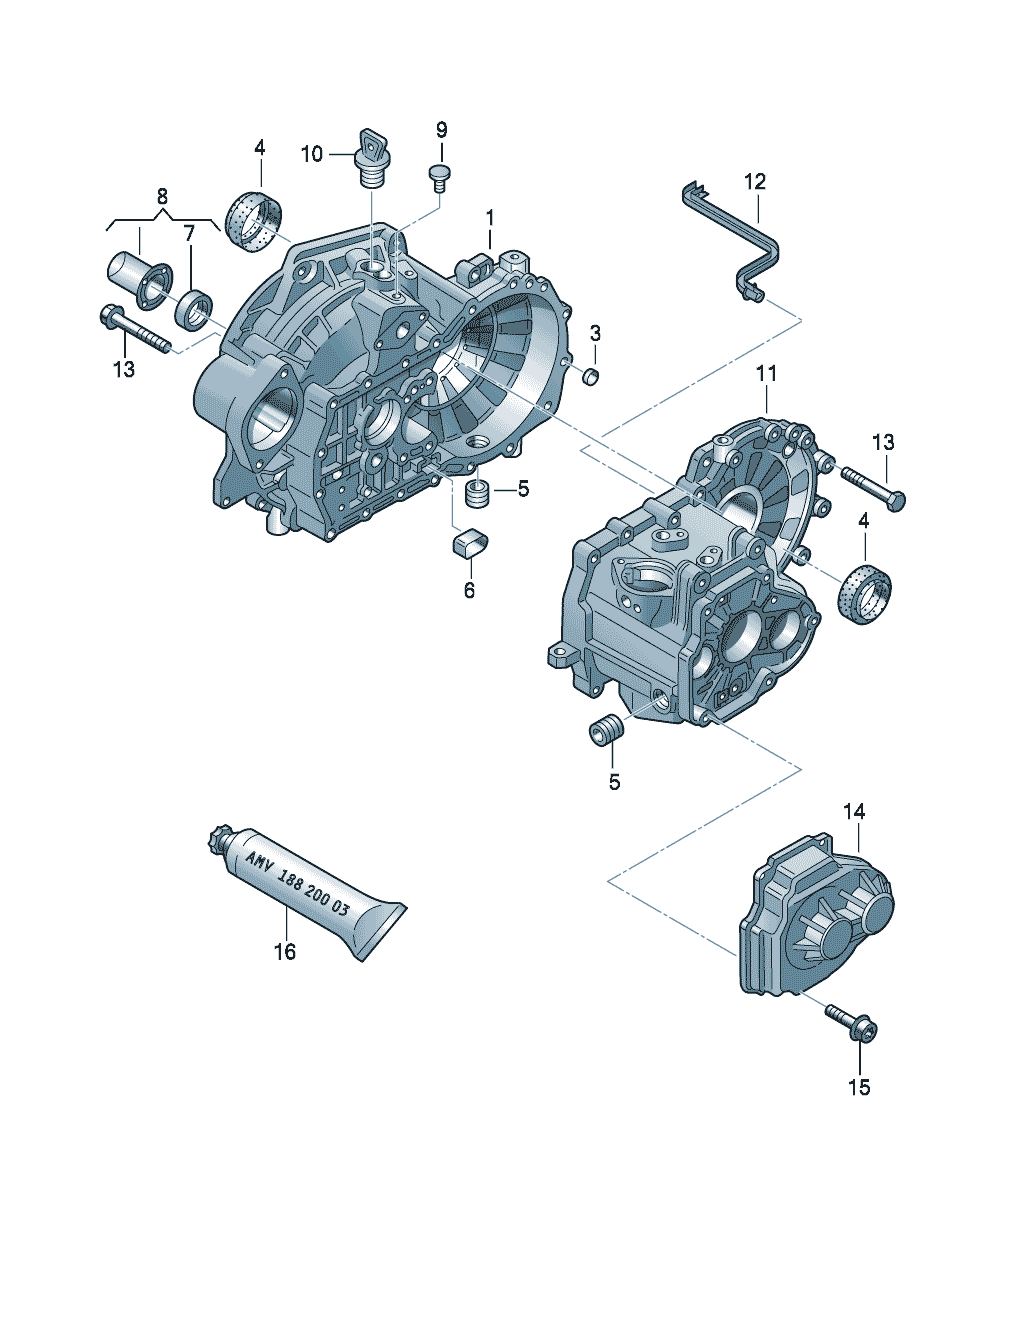 Gear housingfor 6 speed manual gearbox 1.8ltr. - Audi TT/TTS Coupe/Roadster - att